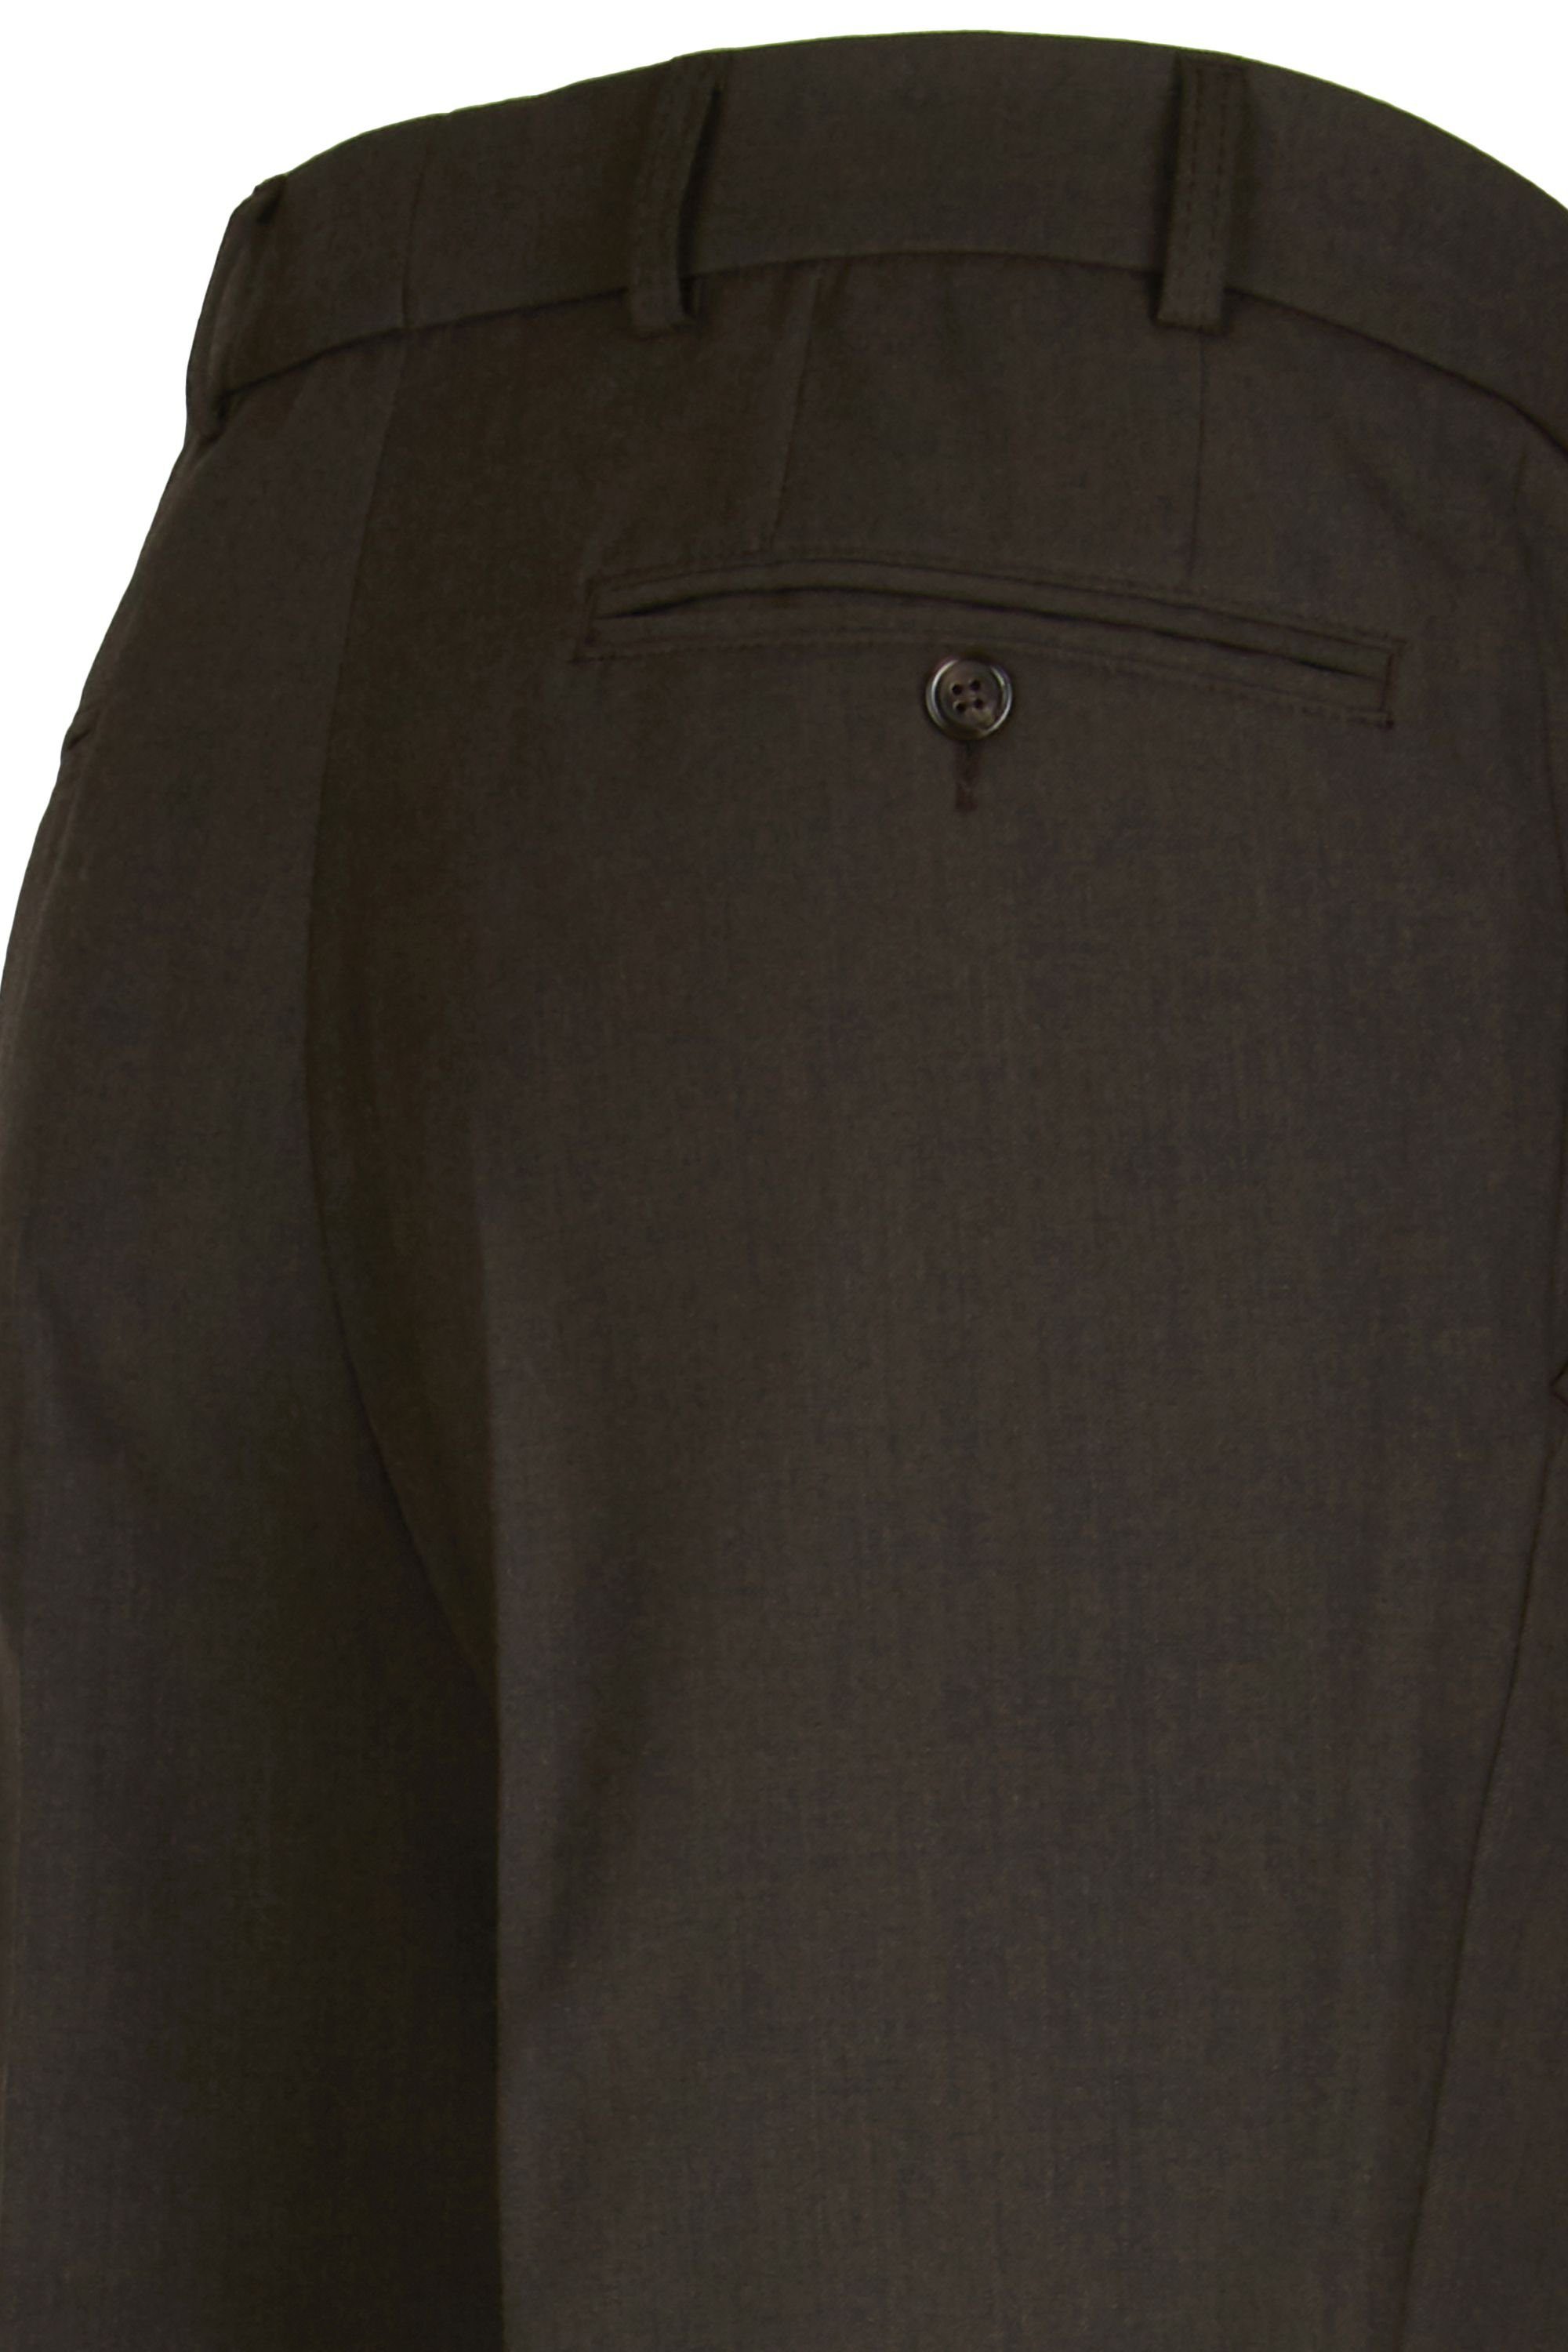 aubi: Stoffhose 26 (28) Herren Fit Flat Anzughose Perfect Front aubi Businesshose braun Modell